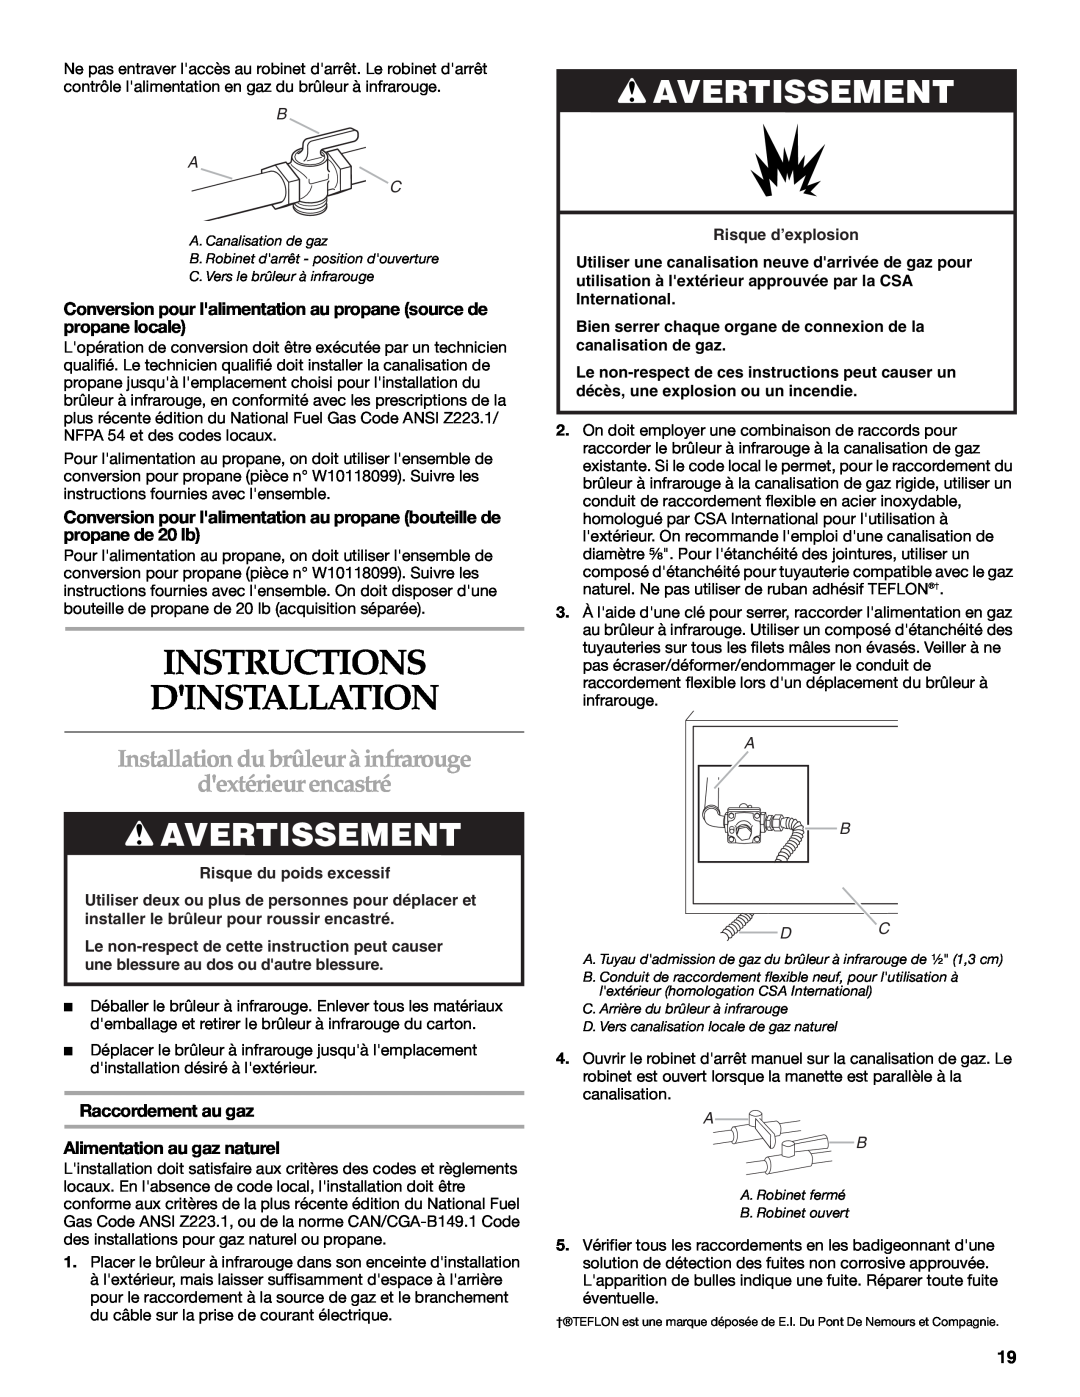 KitchenAid KBEU121T Instructions Dinstallation, Installation dubrûleurà infrarouge, dextérieurencastré, Avertissement 